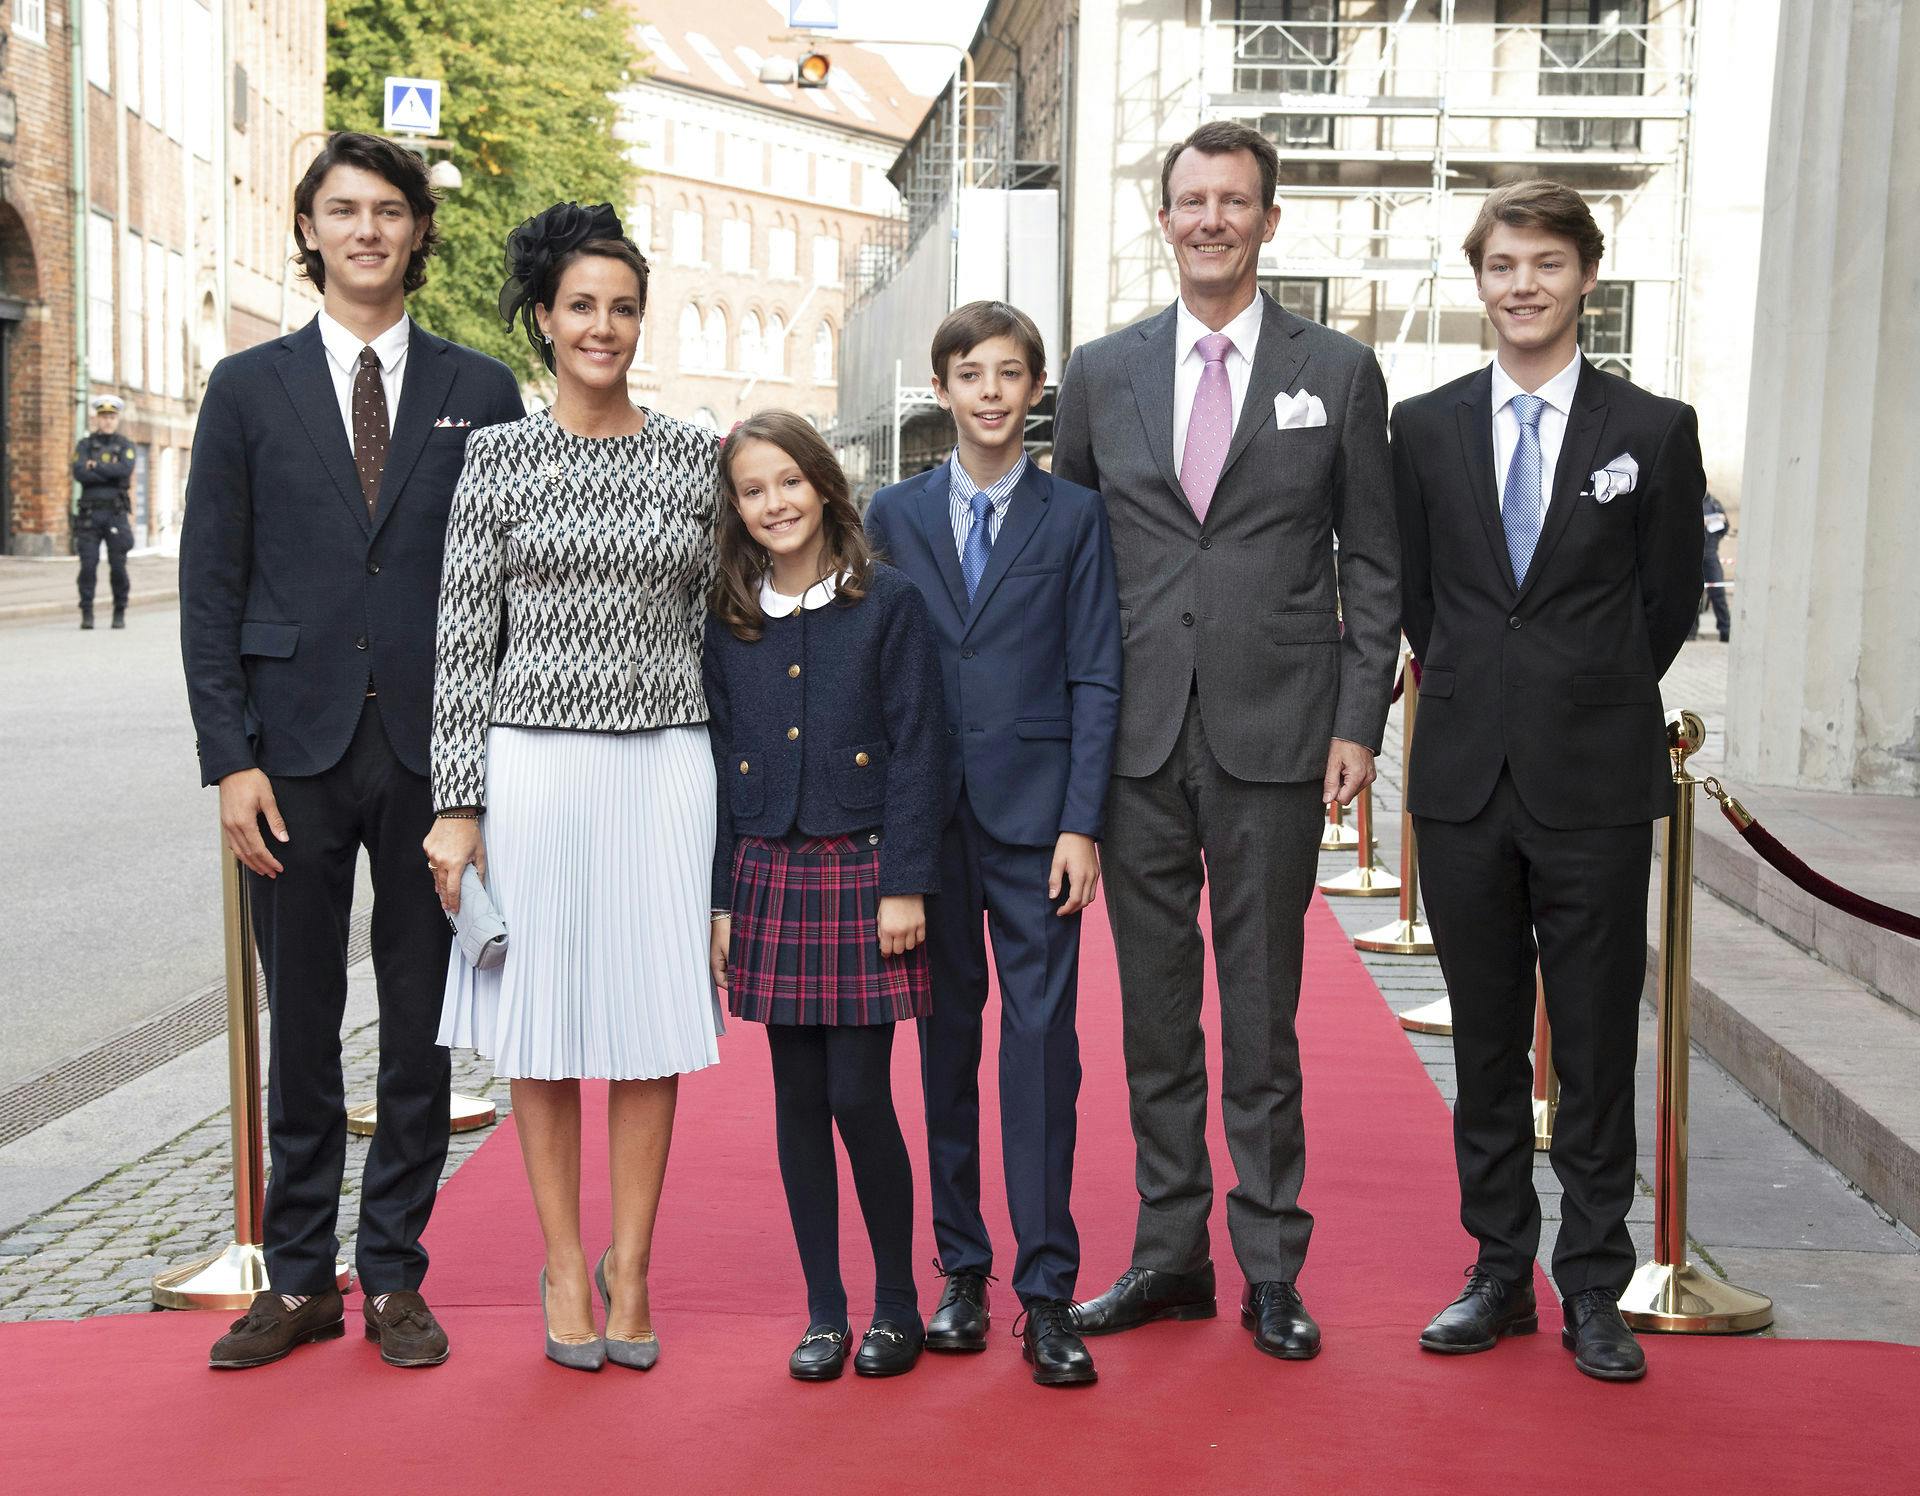 Nikolai, prinsesse Marie, Athena, Henrik, Prins Joachim og Felix.
